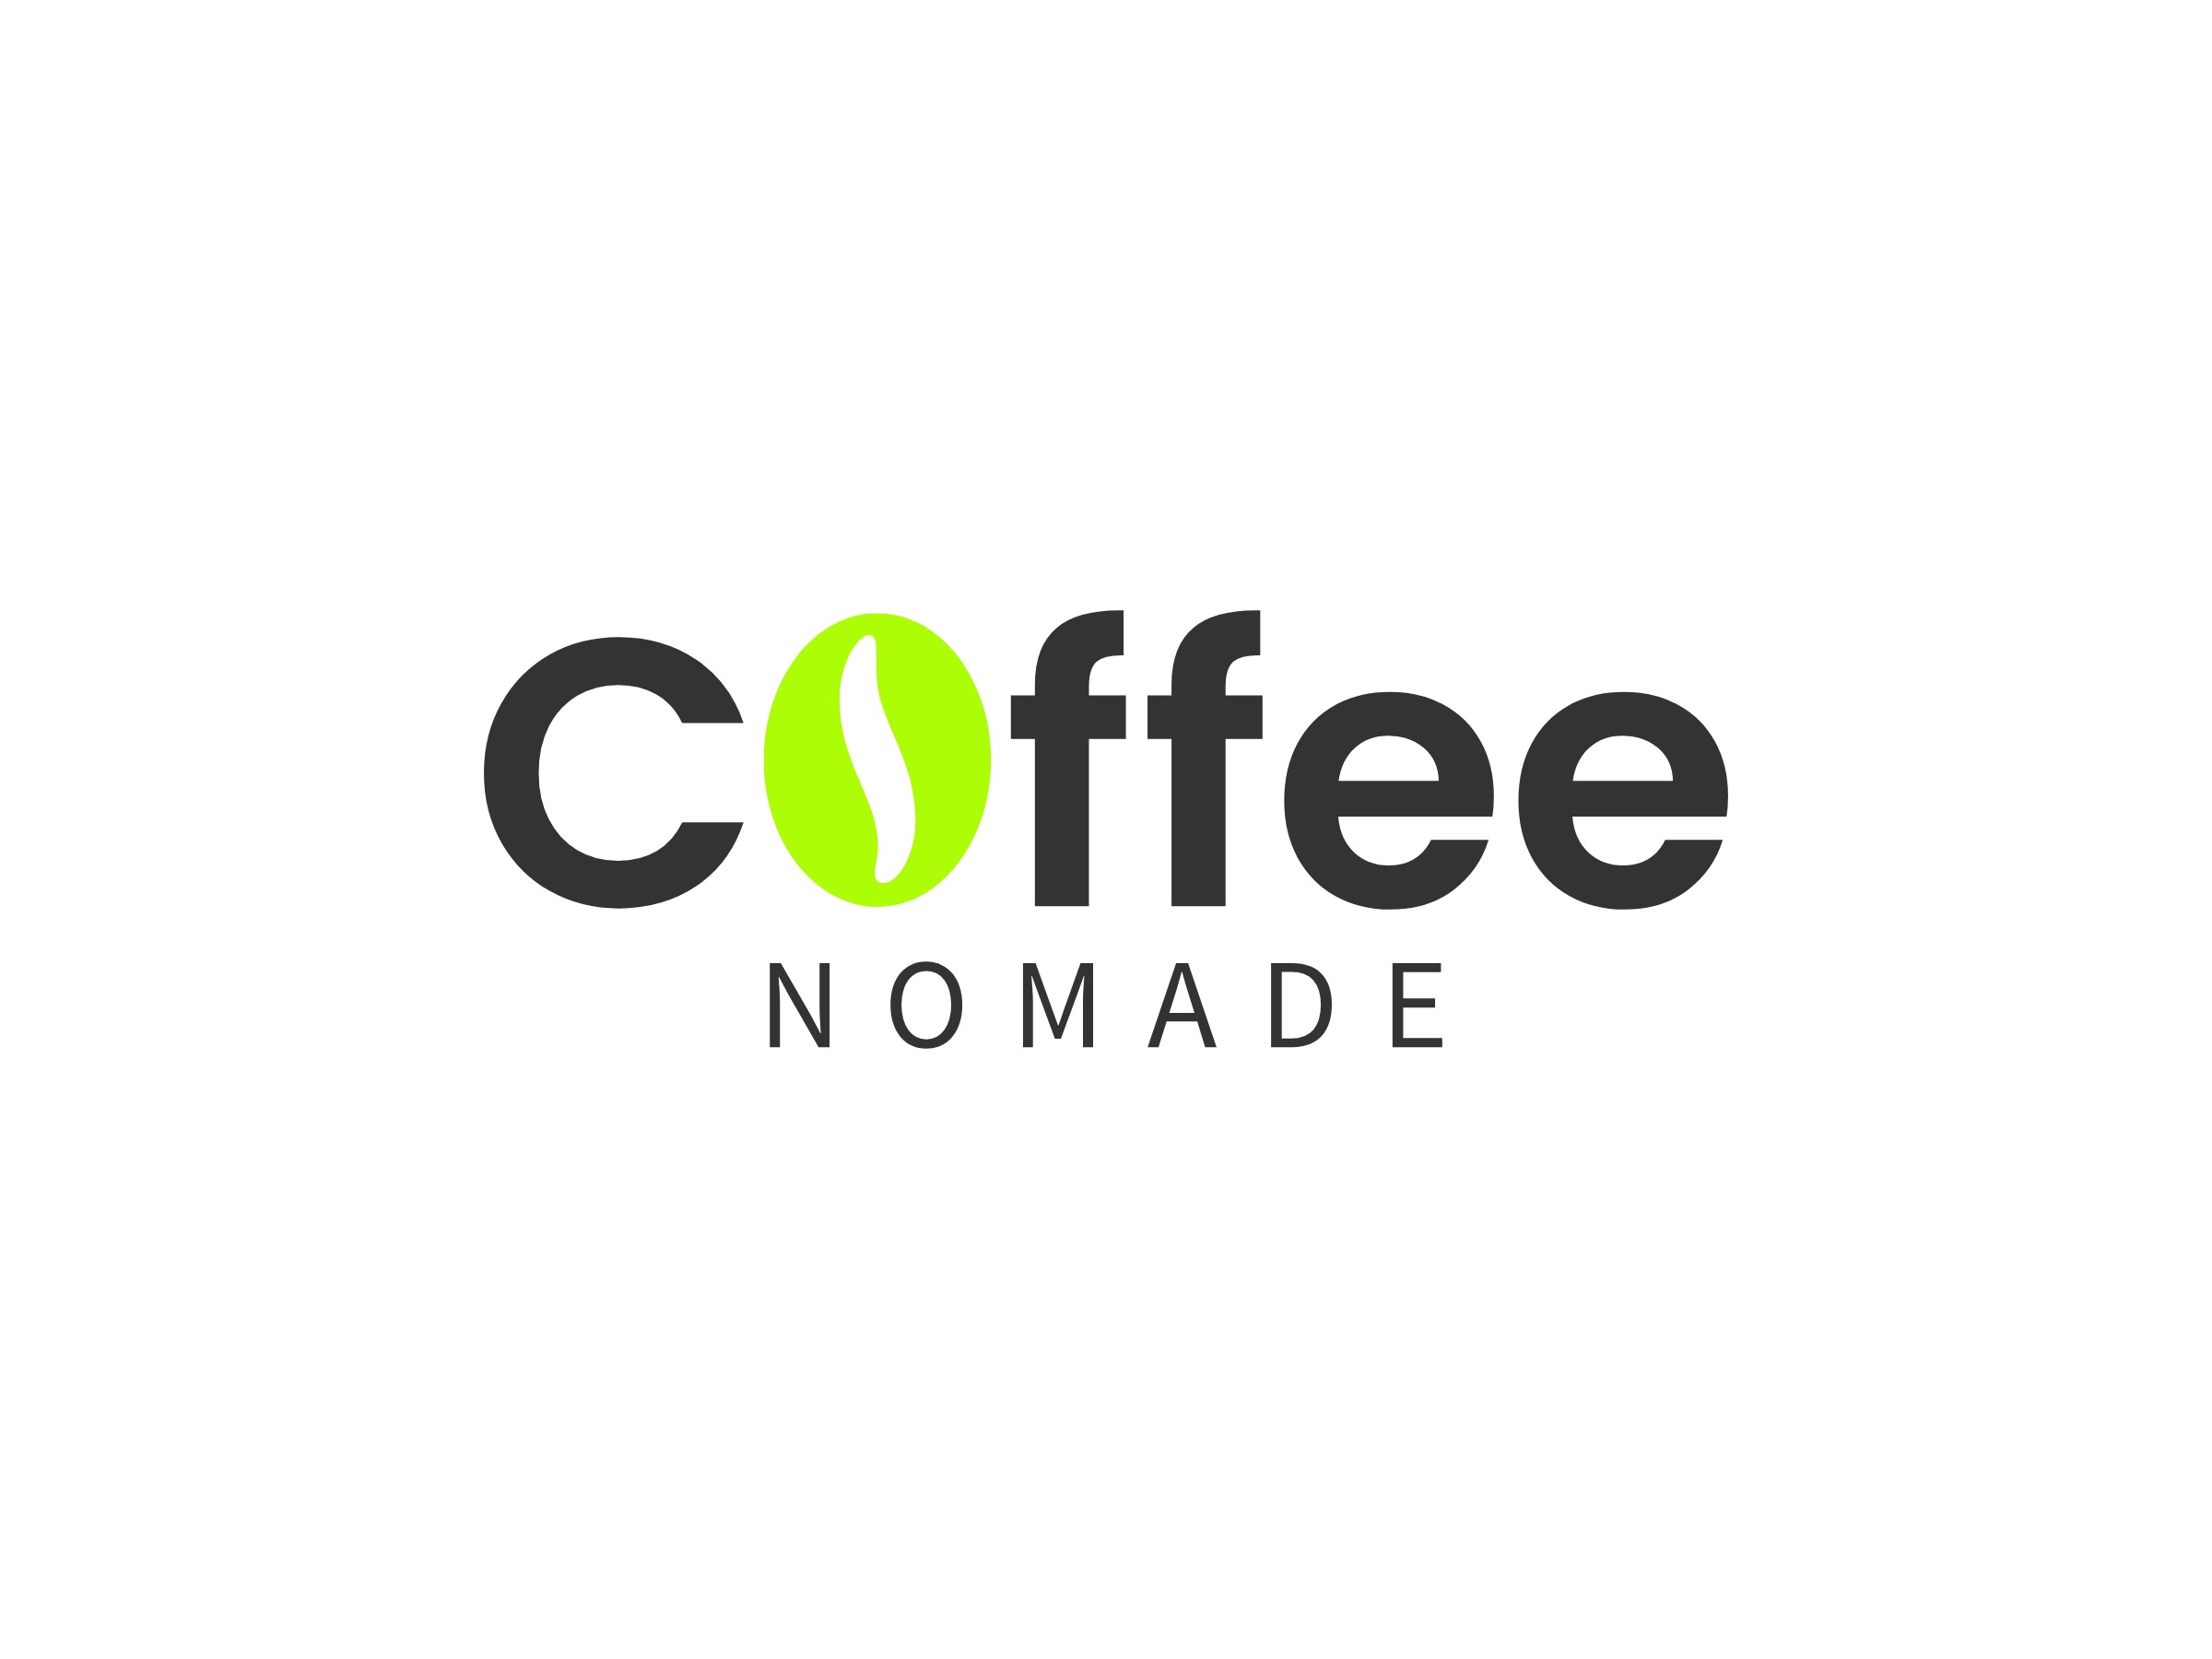 Caffee - nomade